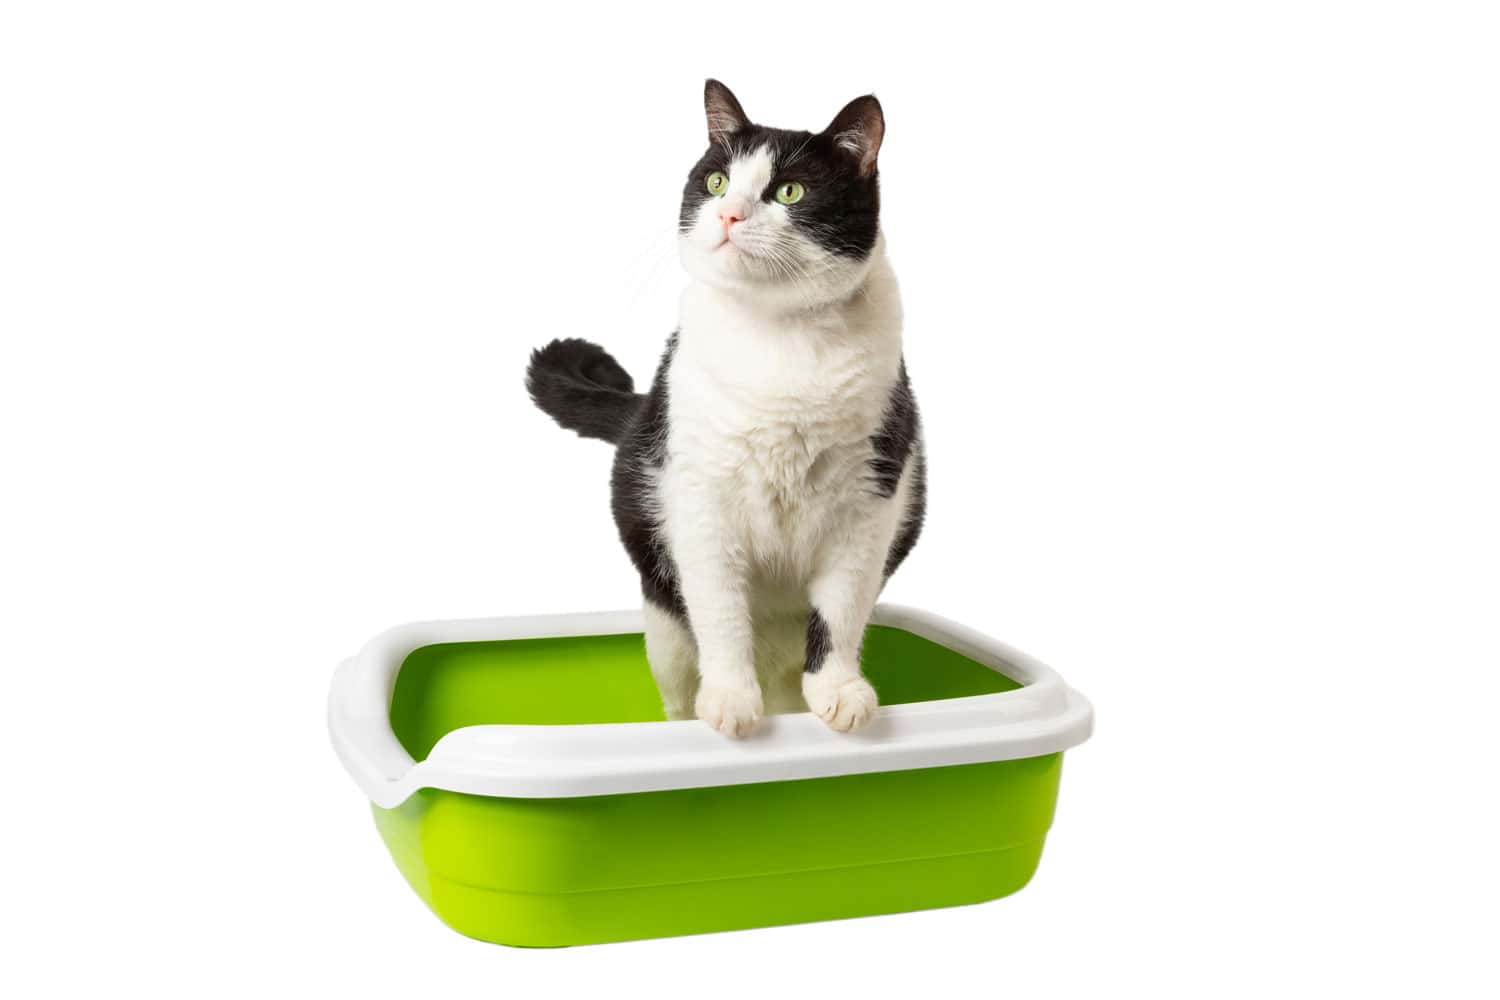 Tuxedo cat pooping in his green cat litter box